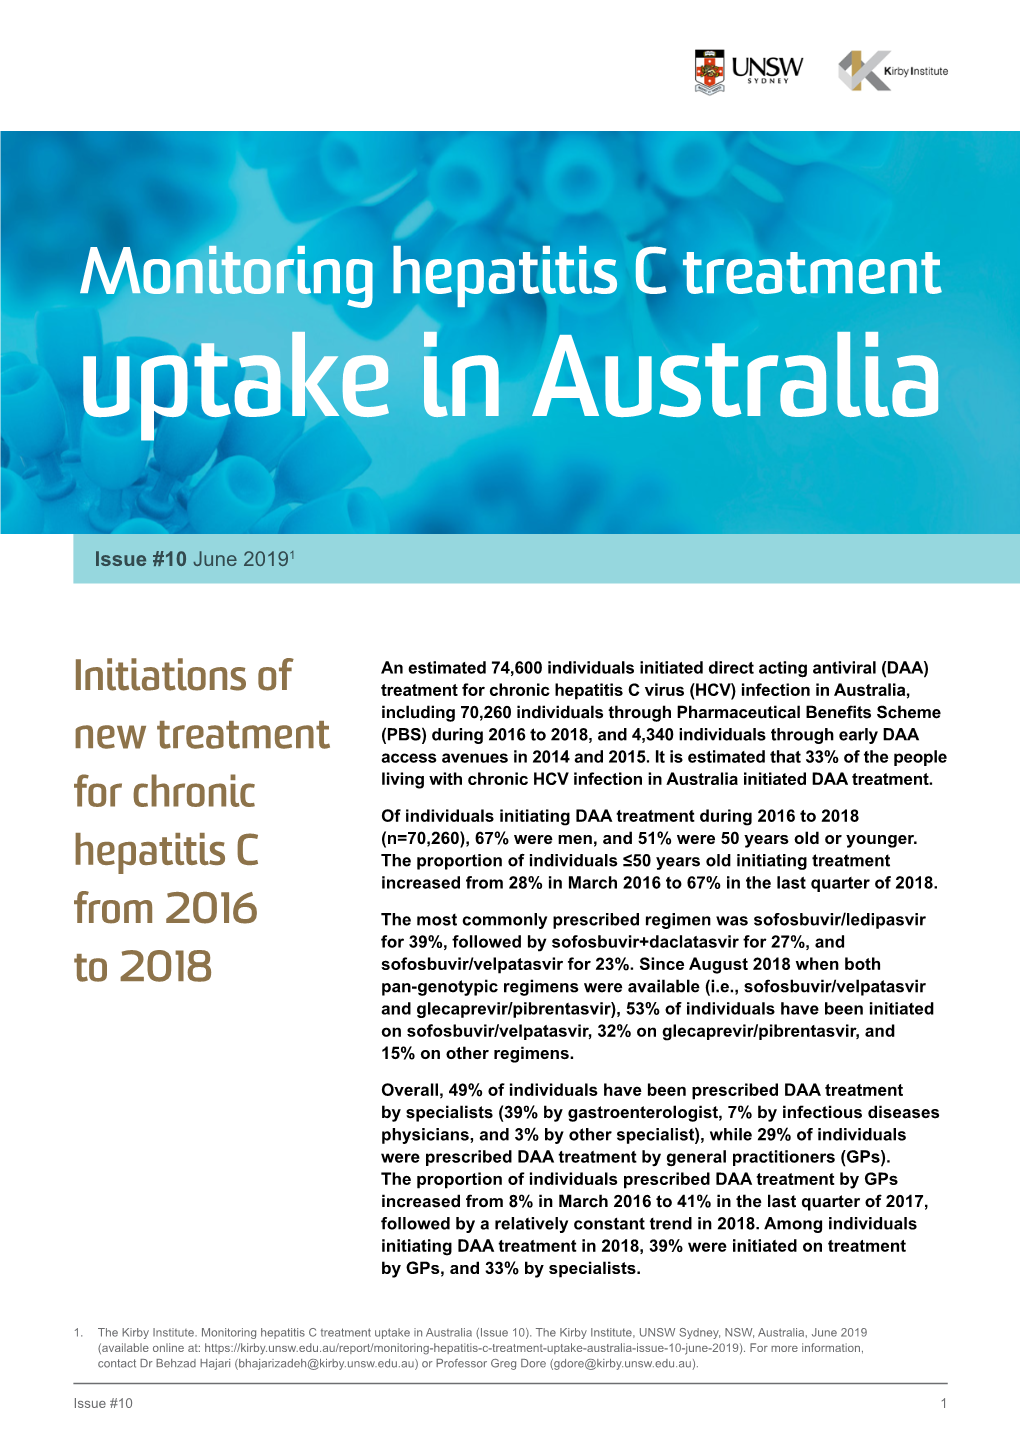 Monitoring Hepatitis C Treatment Uptake in Australia